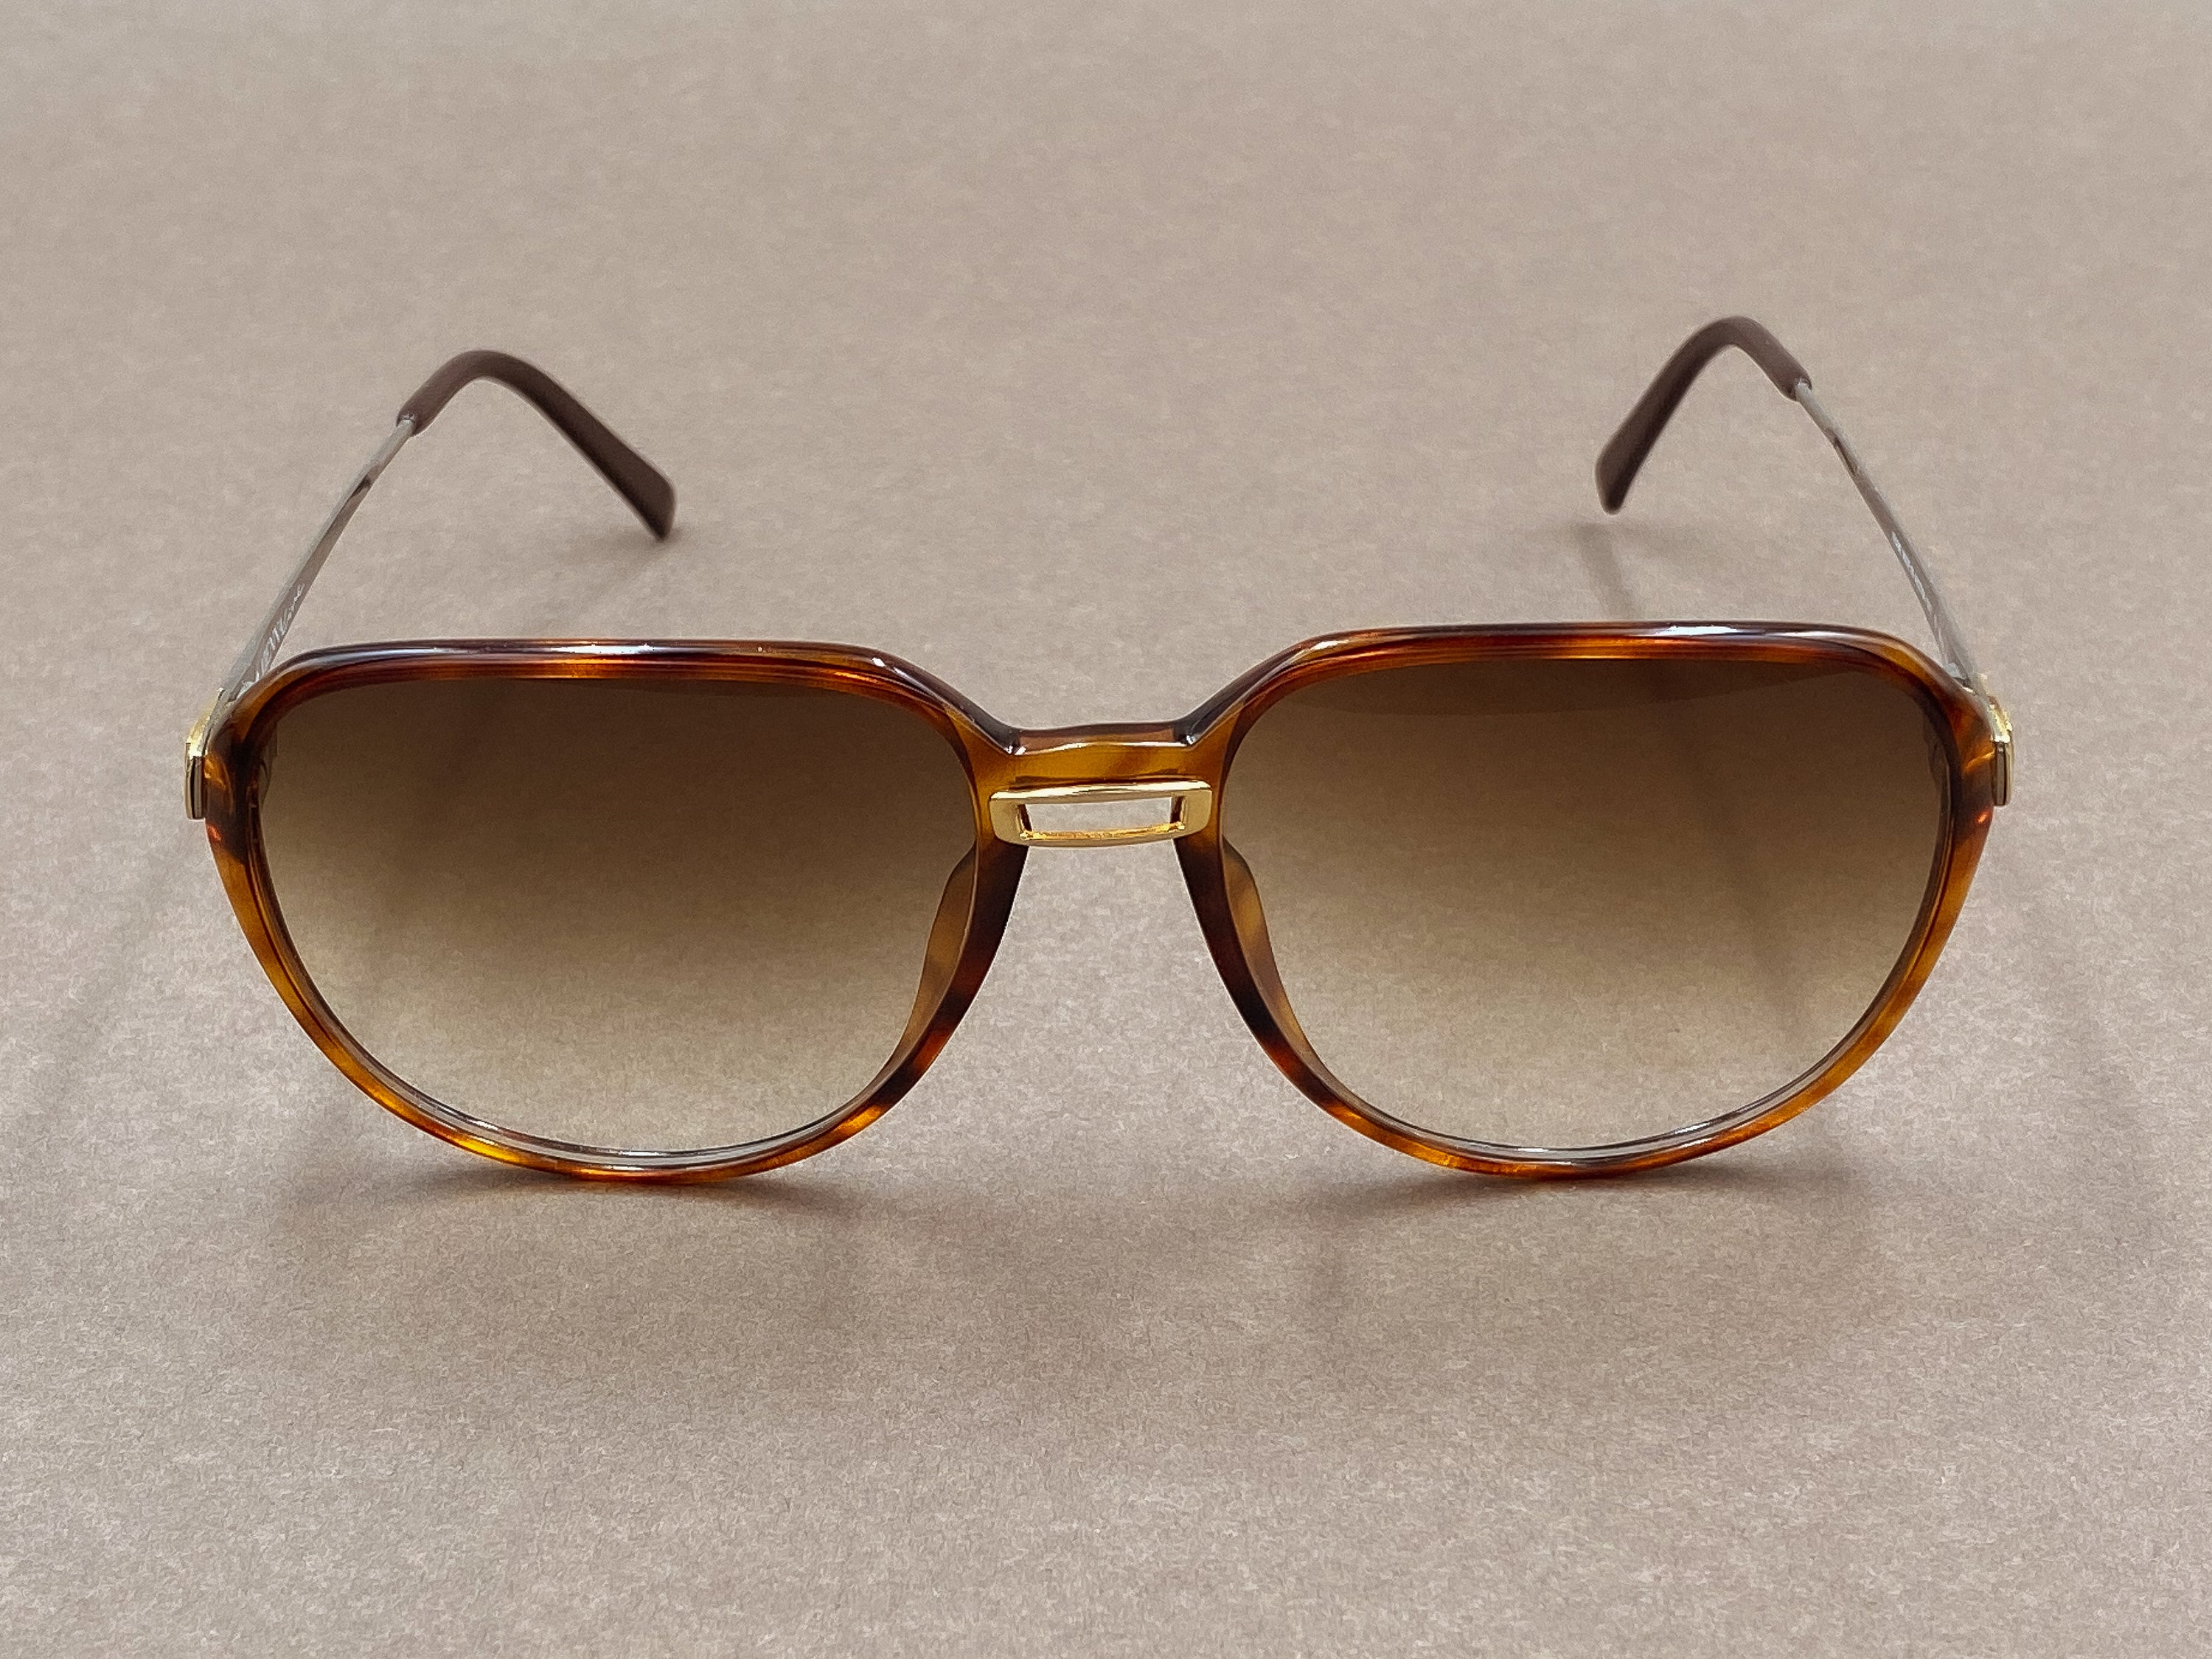 Viennaline 1377 sunglasses